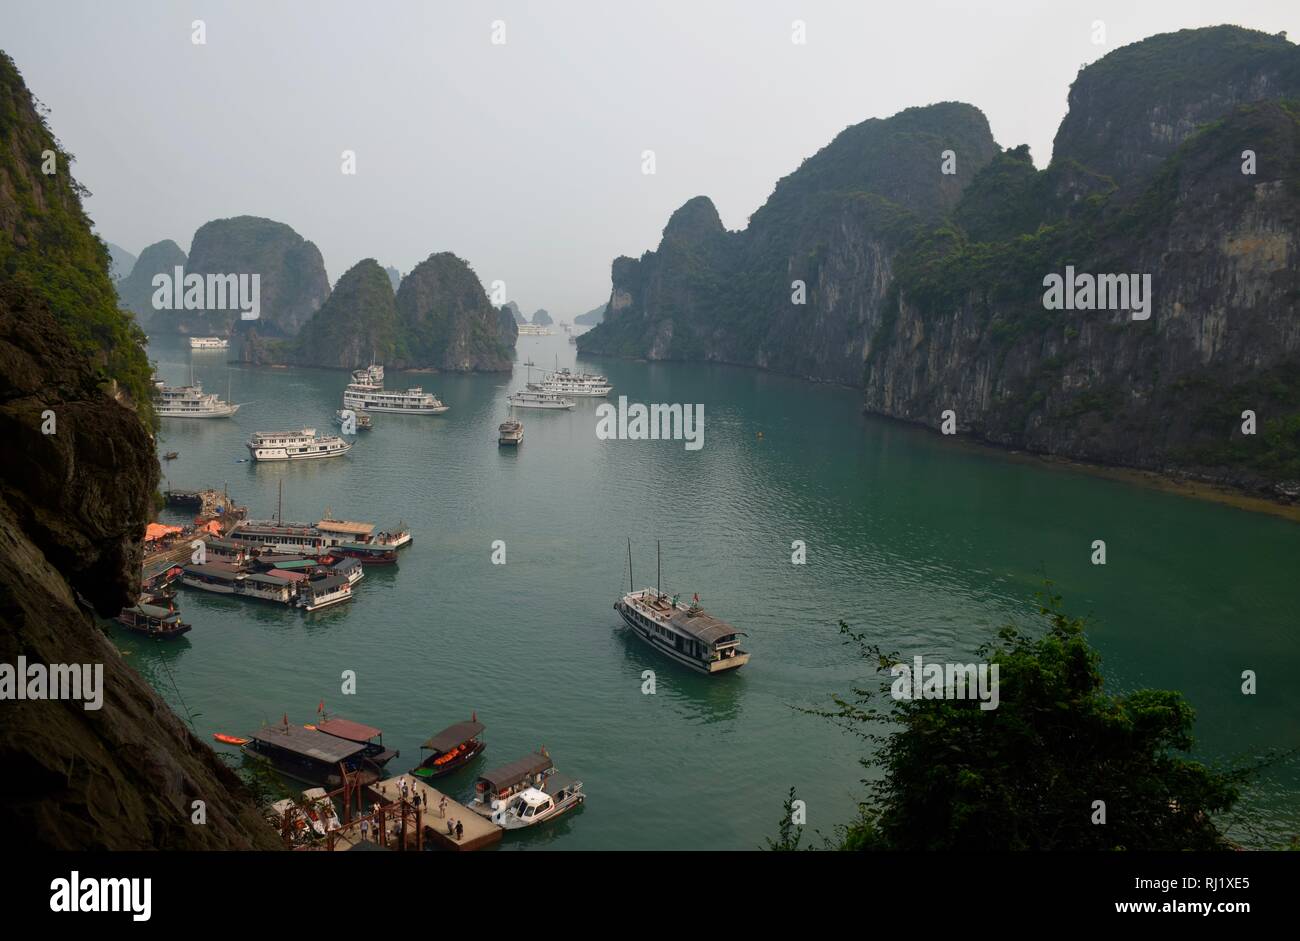 The Halong Bay, Hanoi, Vietnam. Halong Bay is located around 144km east of Hanoi in the Gulf of Tonkin. Stock Photo